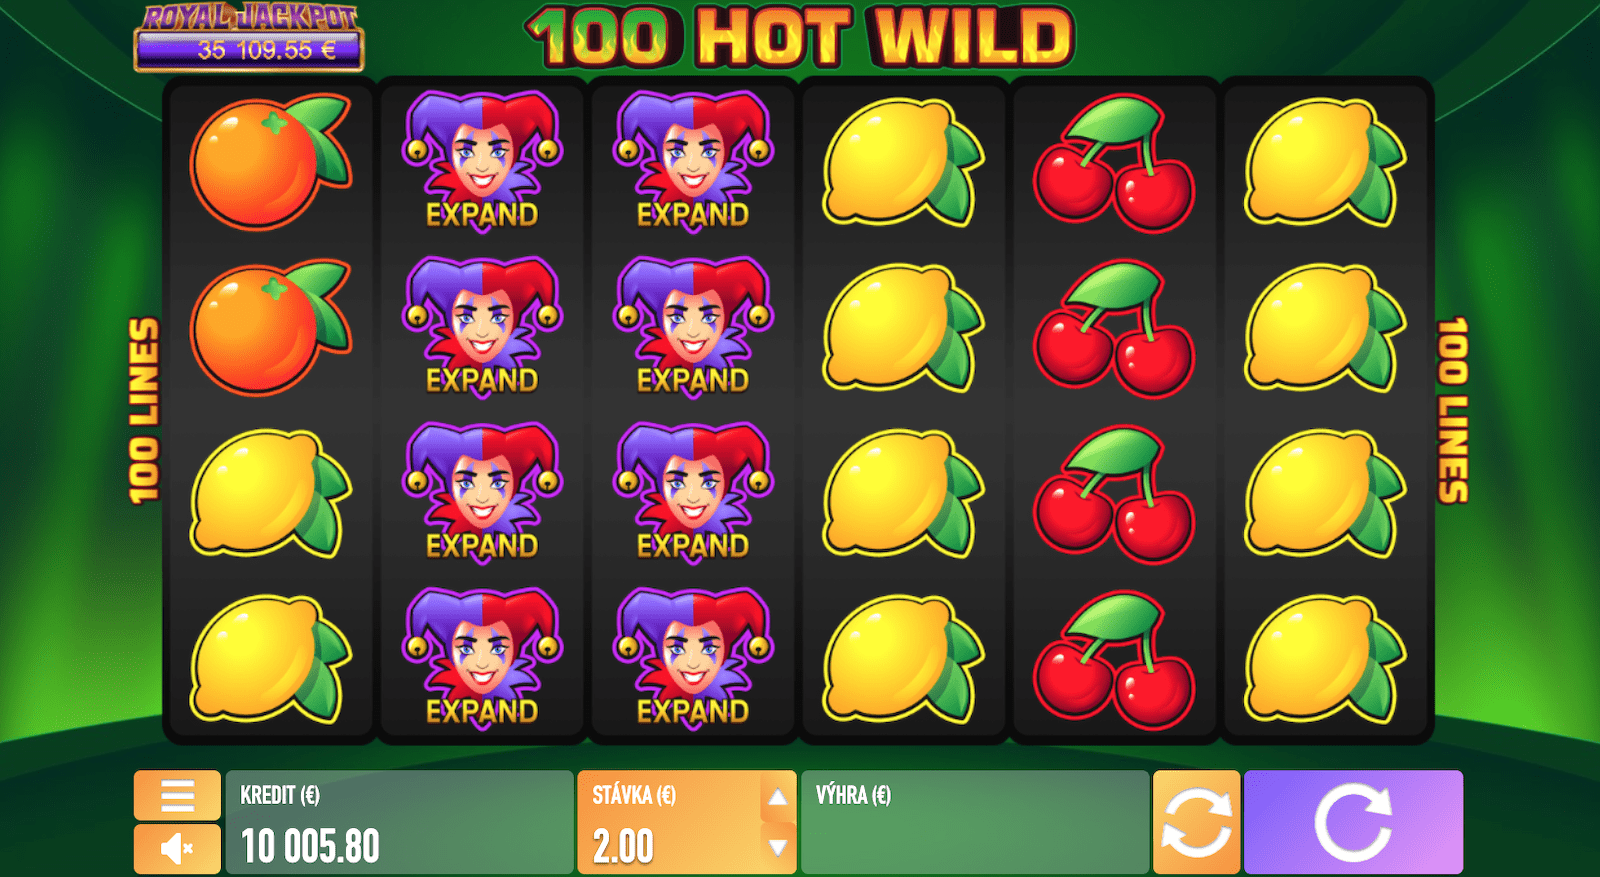 Automat Hot Wild 100 - funkcia Expandujúci Wild Symbol